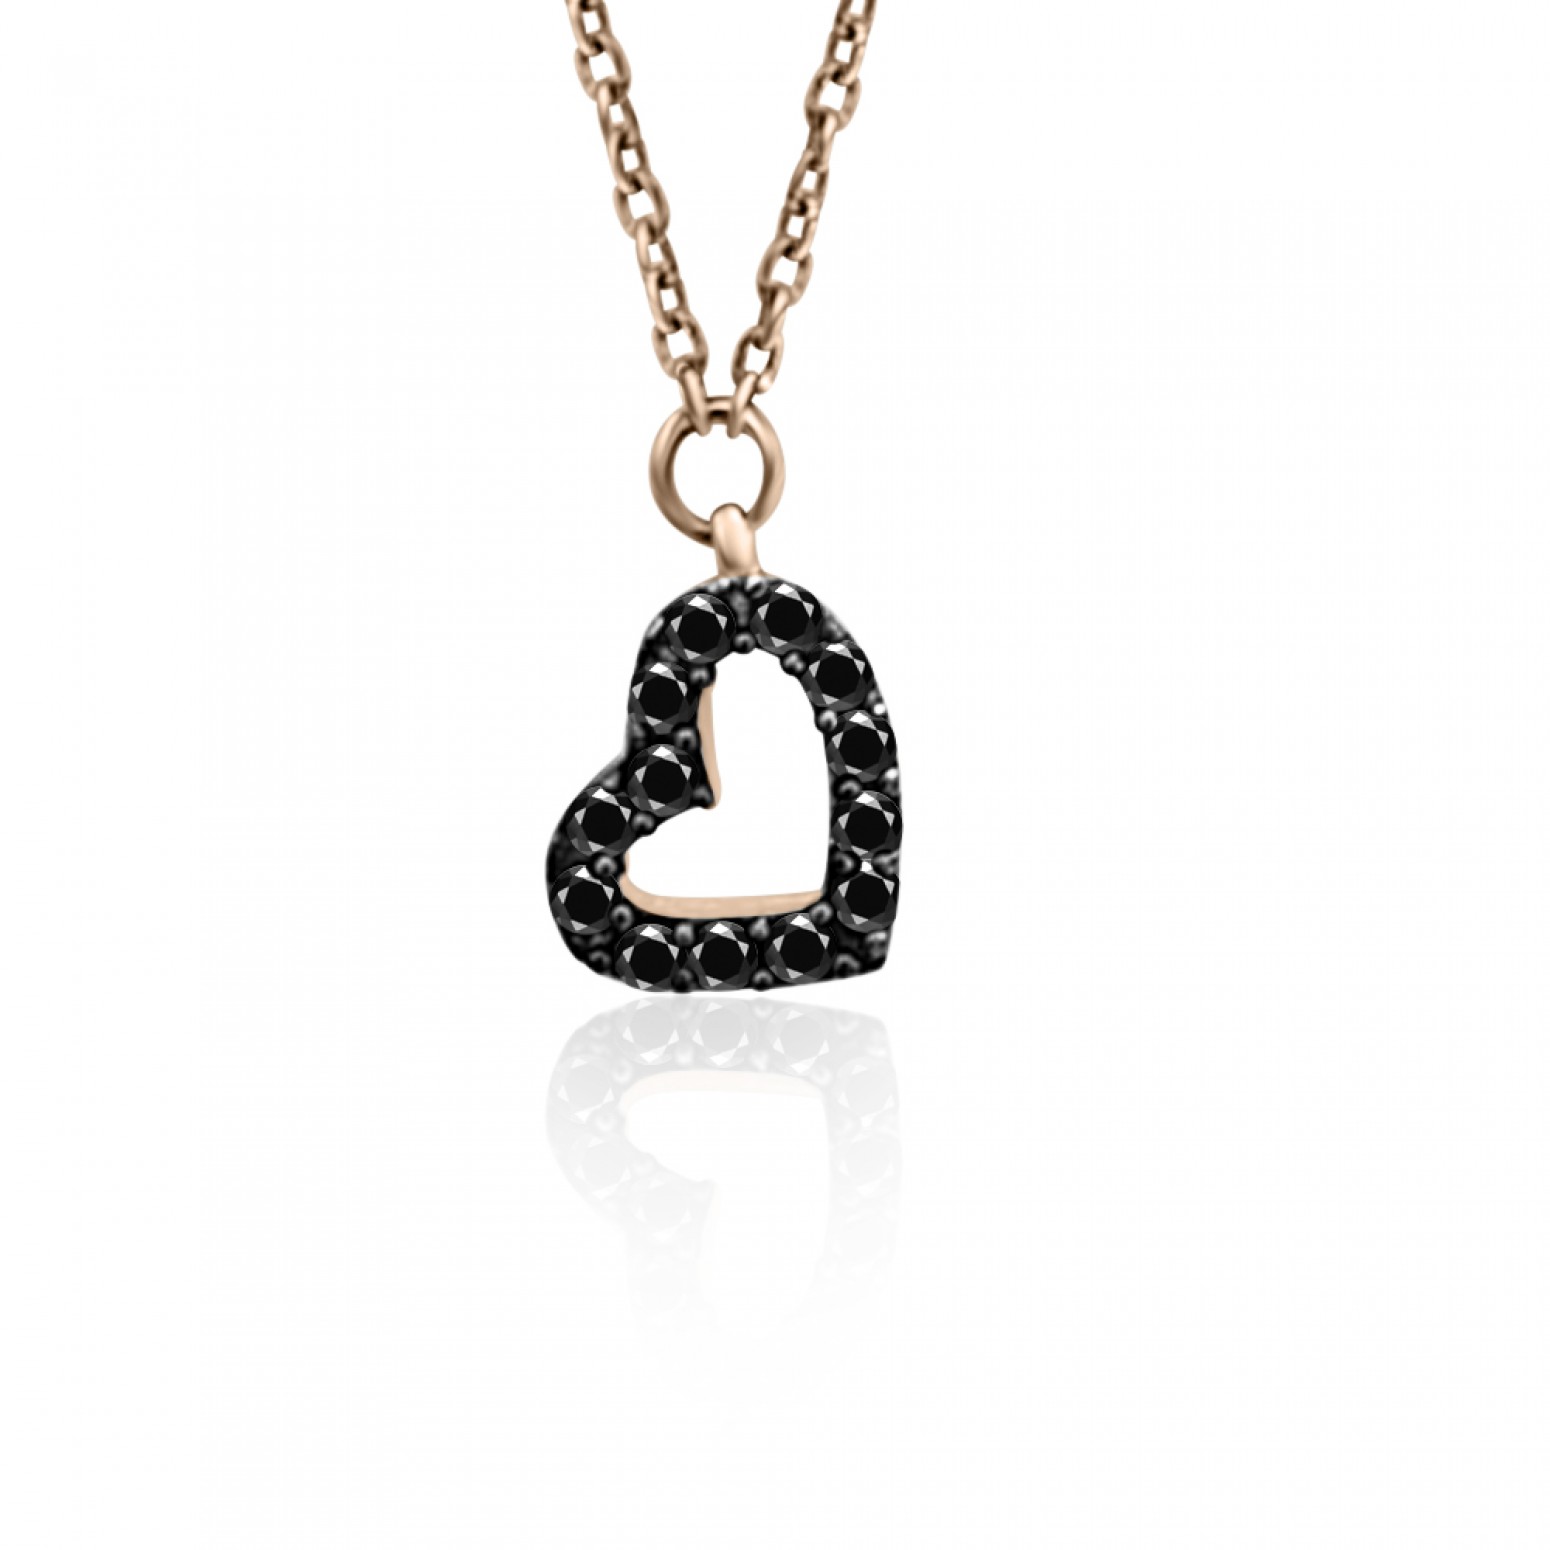 Heart necklace, Κ9 pink gold with black zircon, ko4939 NECKLACES Κοσμηματα - chrilia.gr